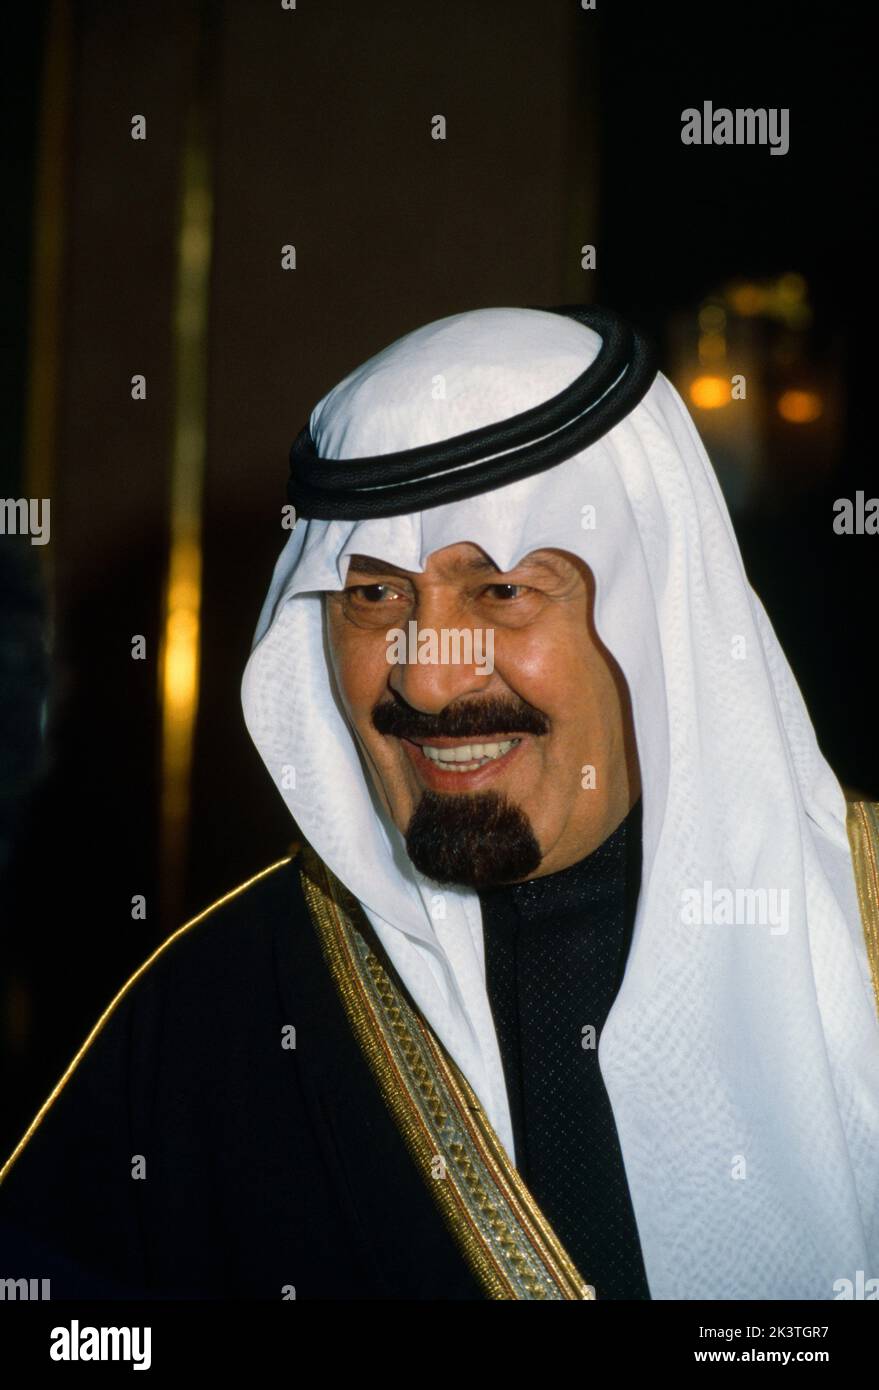 Saudi Arabia Prince Abdullah Bin Abdulaziz Al Saud Former King of Saudi Arabia Reigning 2005 - 2015 Stock Photo